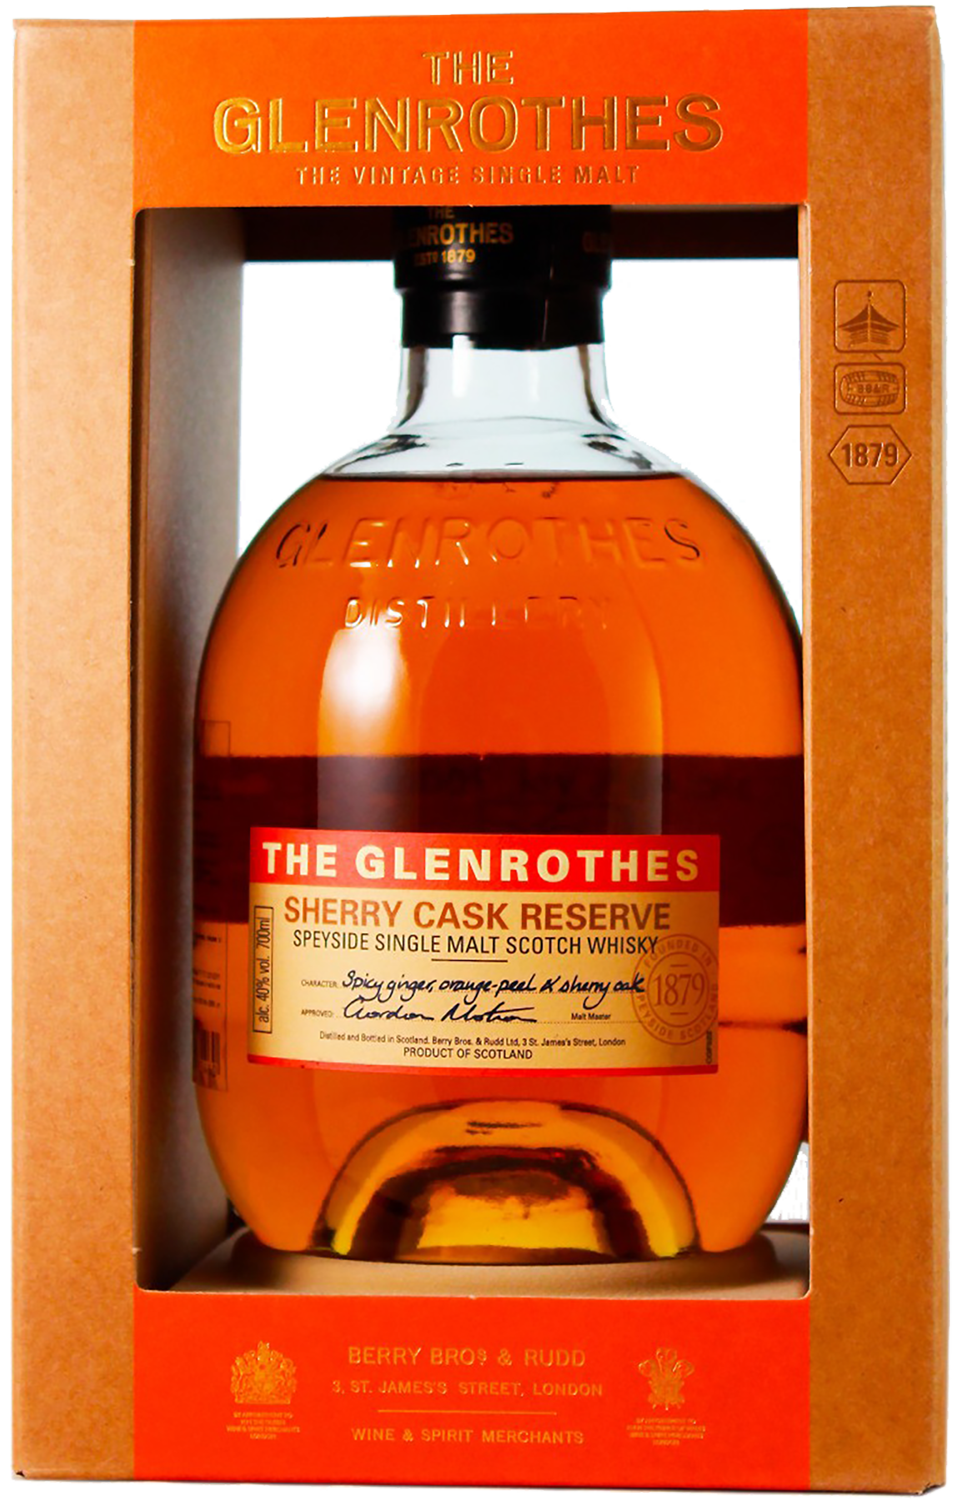 The Glenrothes Sherry Cask Reserve Speyside Single Malt Scotch Whisky(gift box) the glenrothes 18 y o speyside single malt scotch whisky gift box